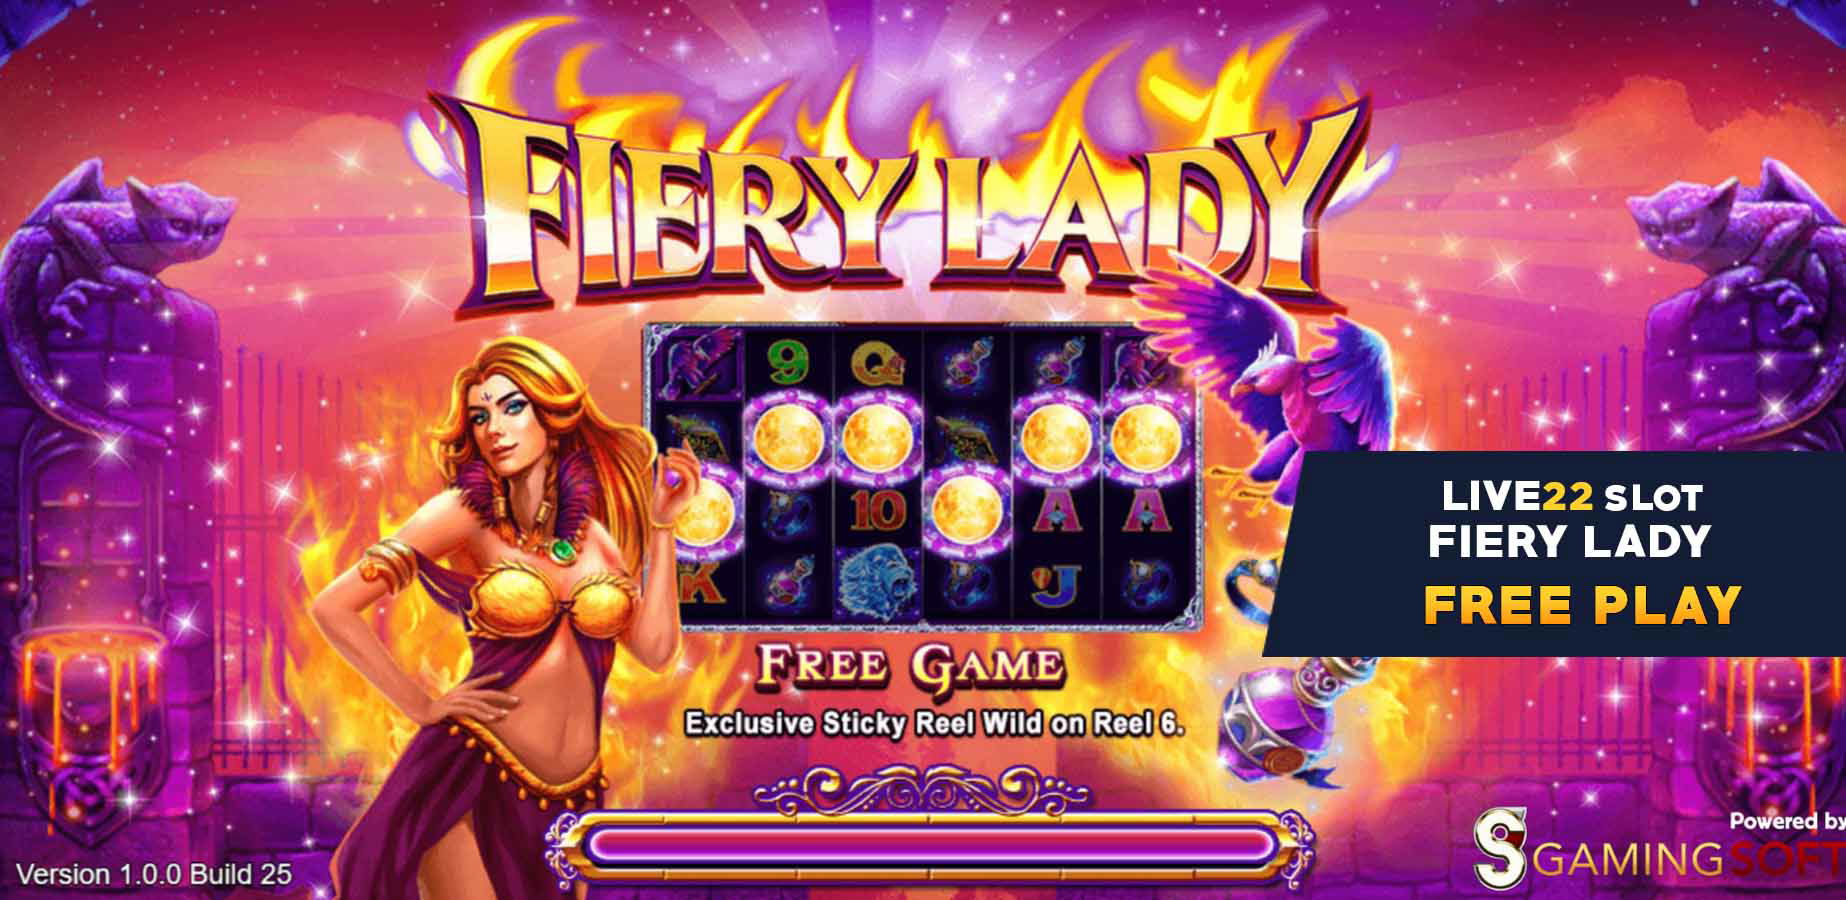 Free Play 6 Fiery Lady Slot Game - Live22 Myanmar (1)